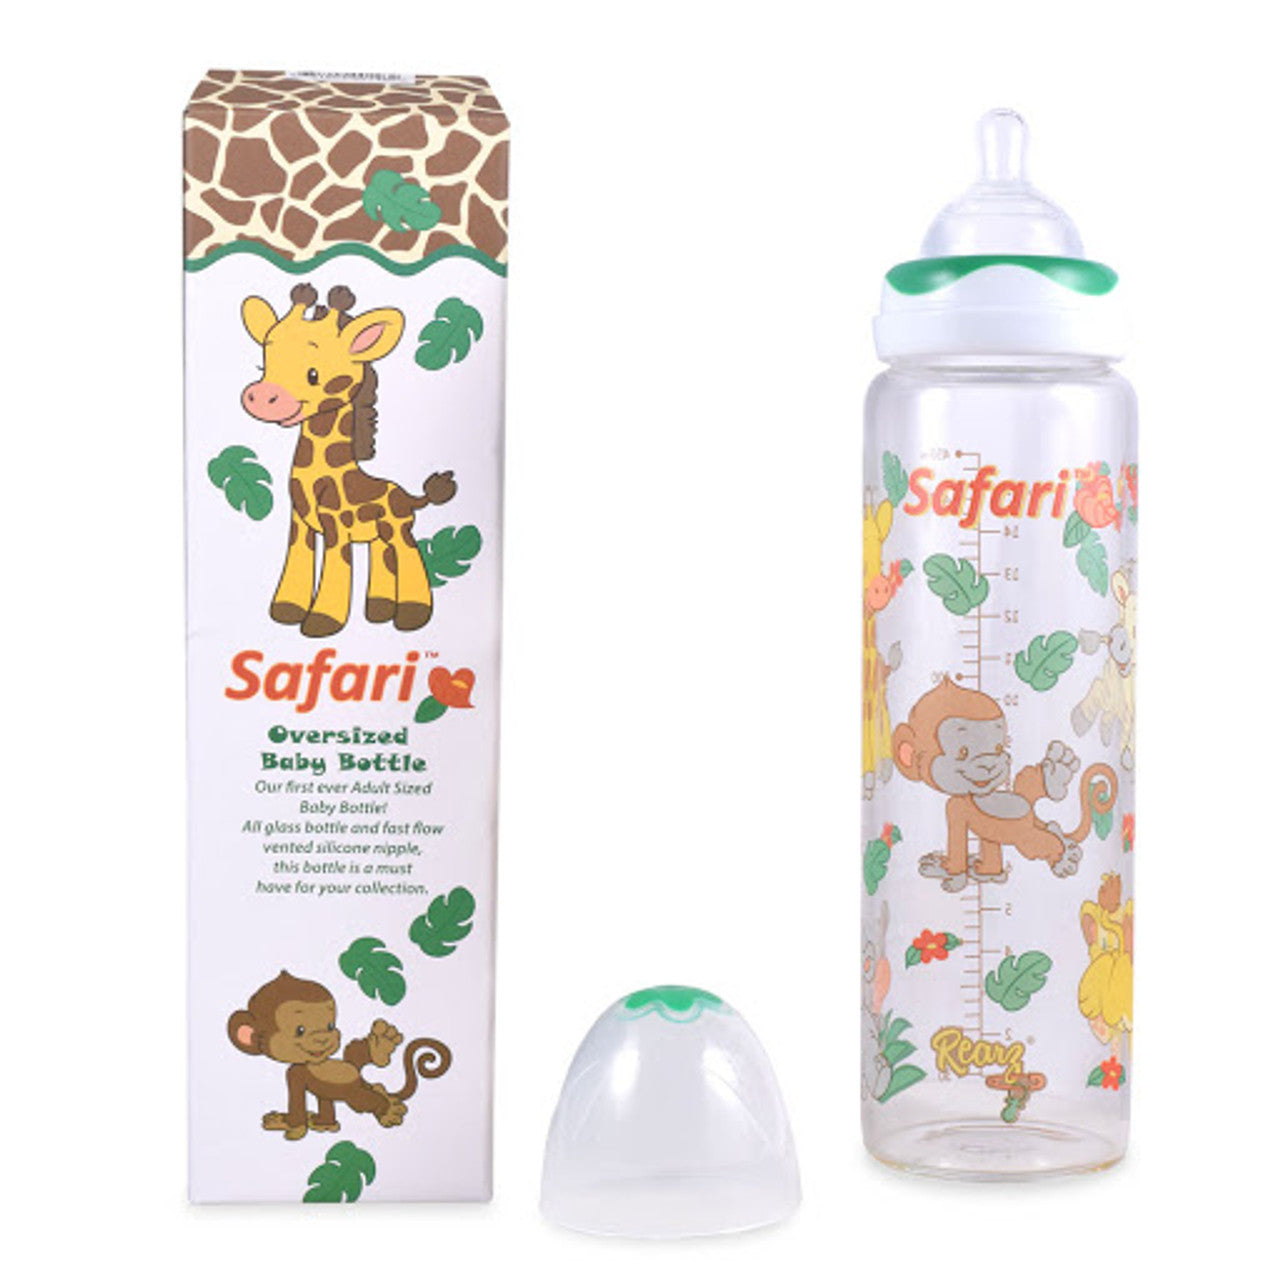 Rearz - Nighttime Adult Diapers - Mega Safari